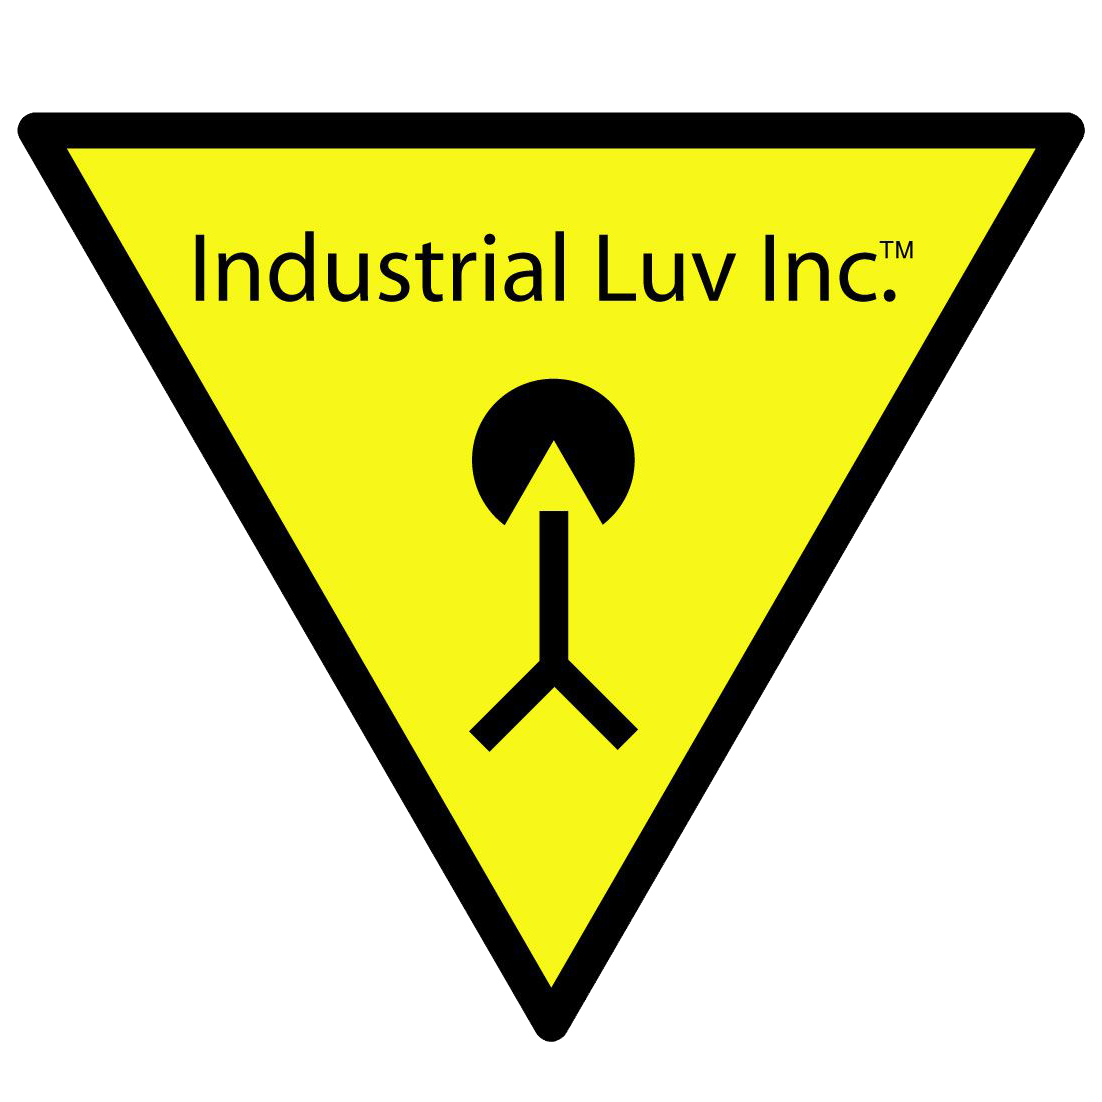 www.industrialuv.com